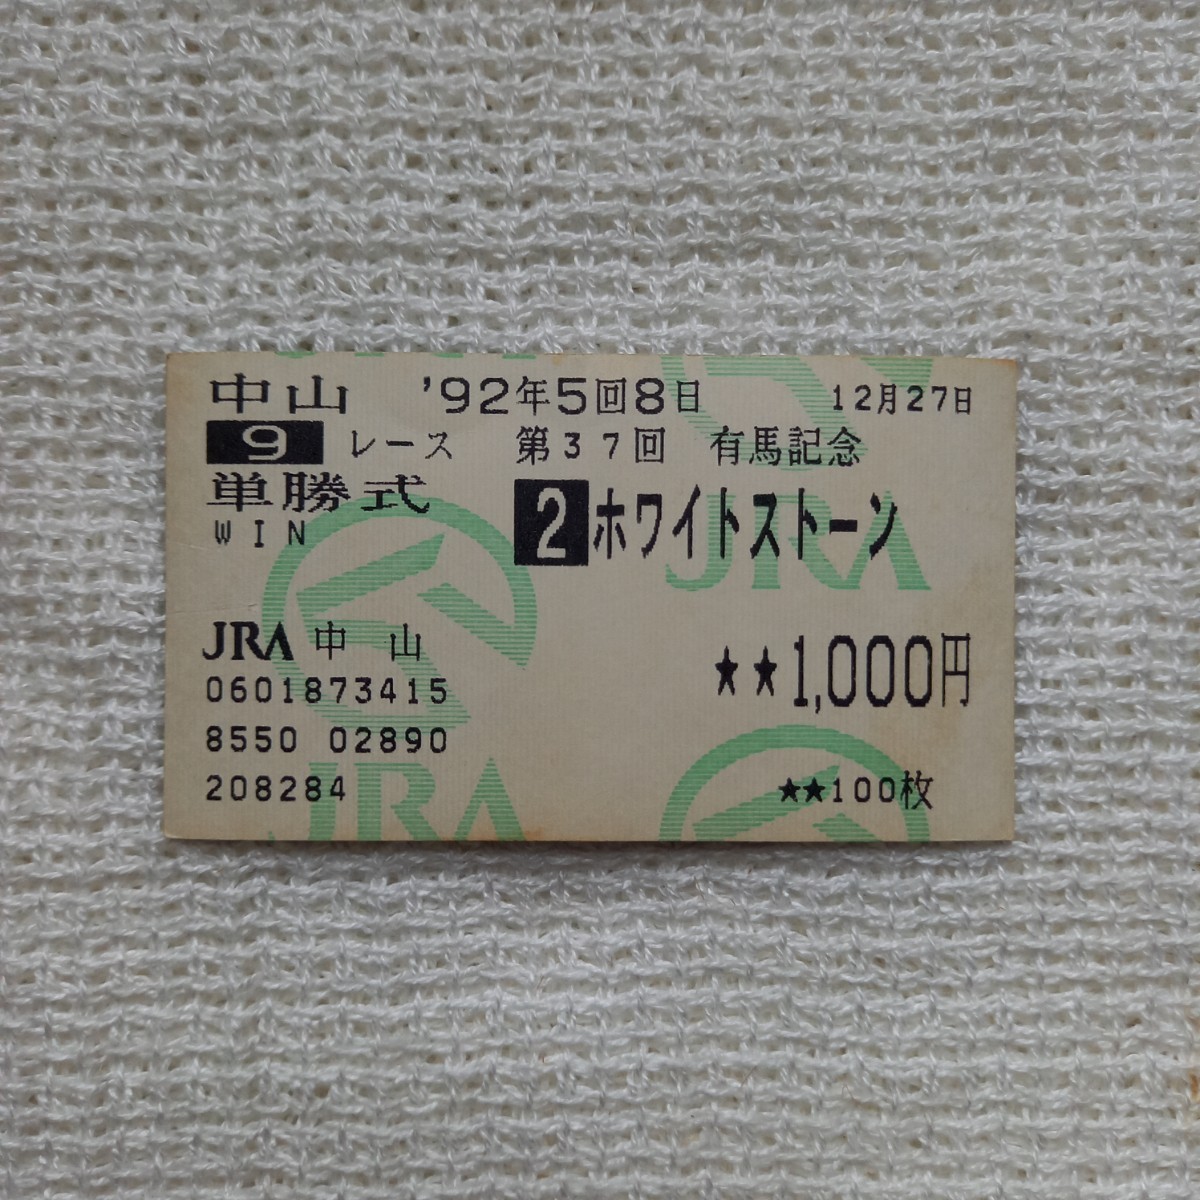 JRA単勝馬券【カネツフルーヴ 中山競馬3回8日11レース】2000年4月16日-